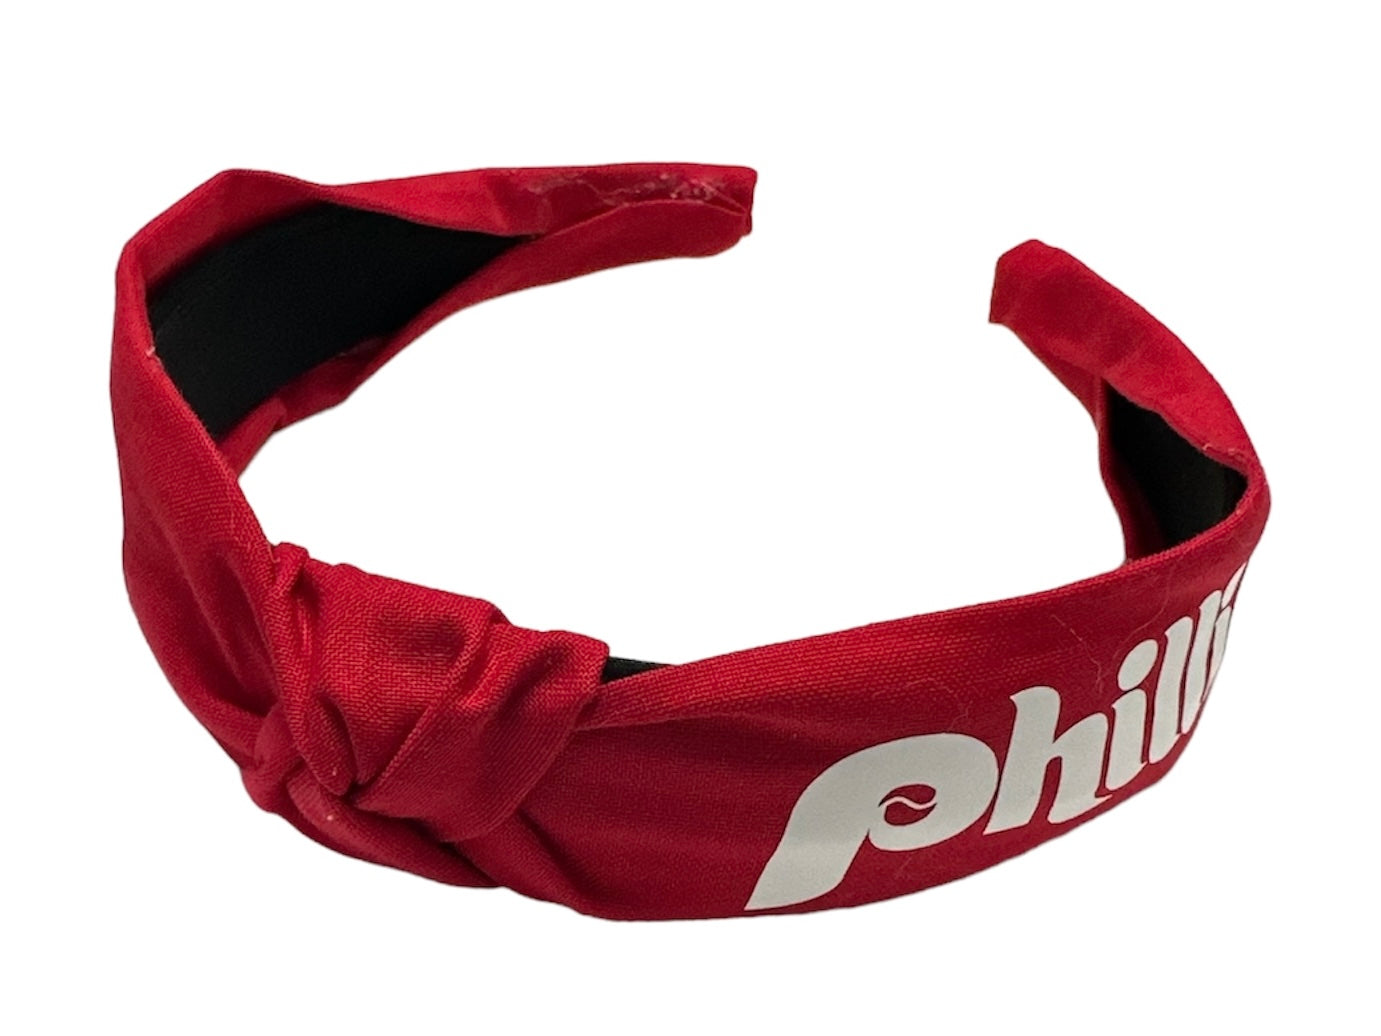 Phillies Headbands